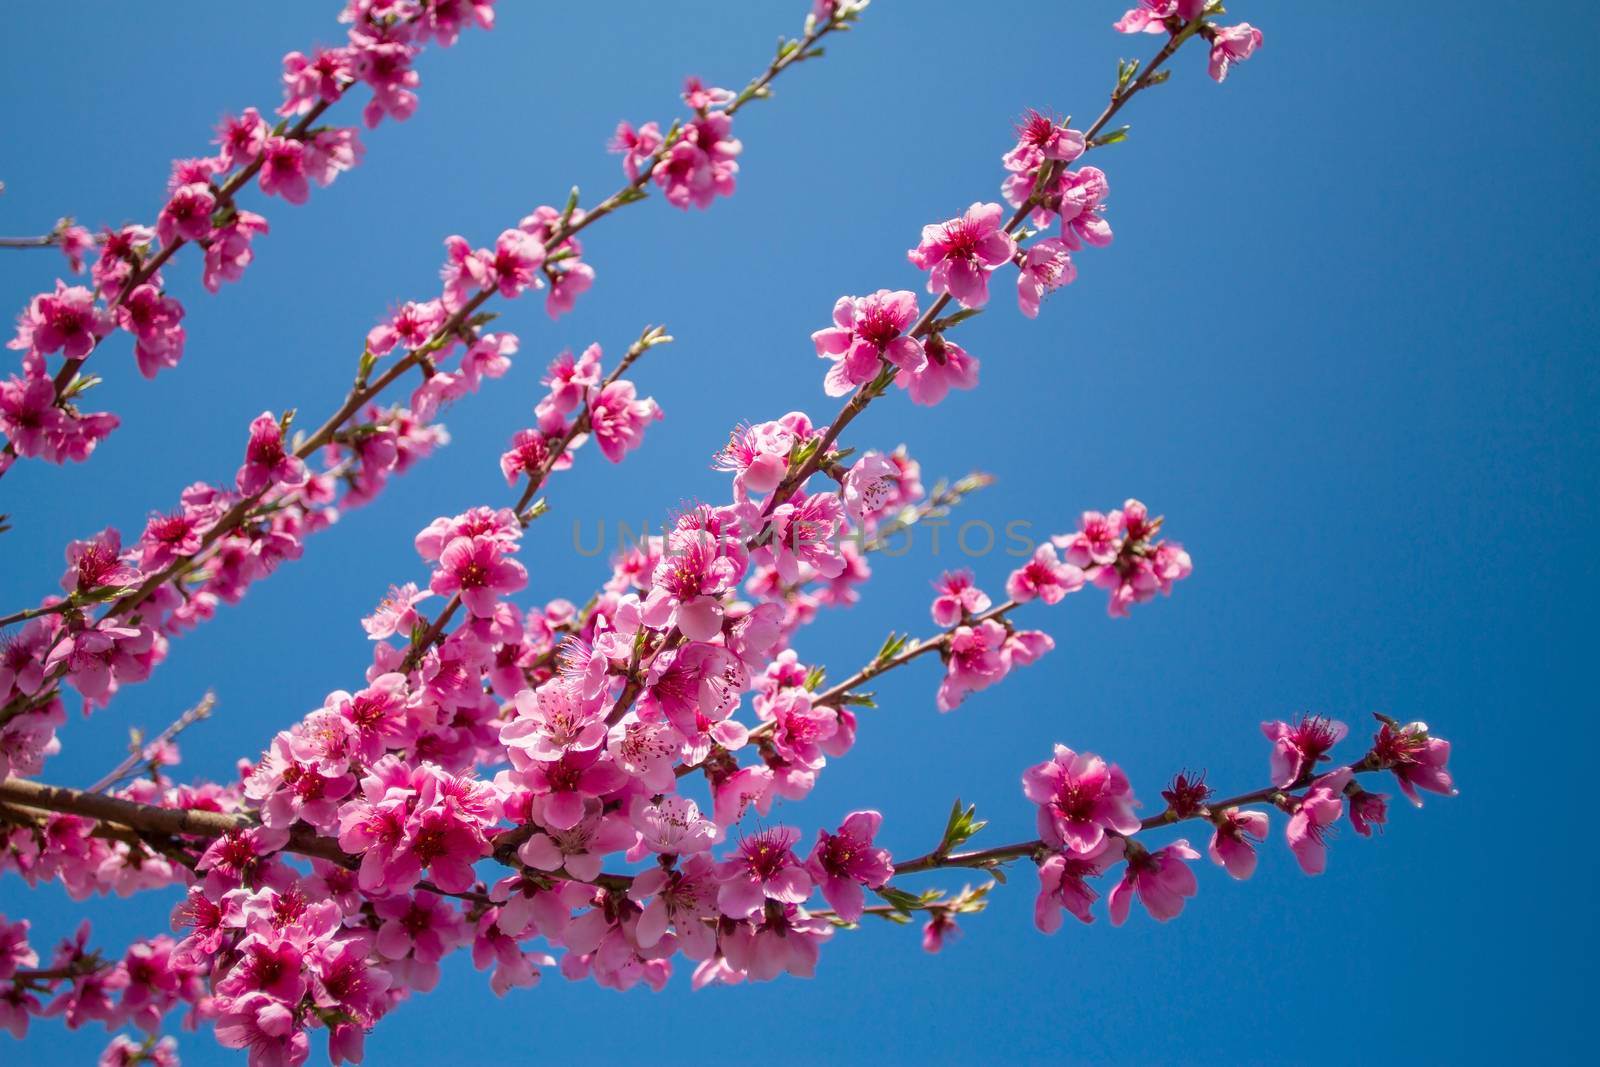 Peach blossoms close-up against the blue sky